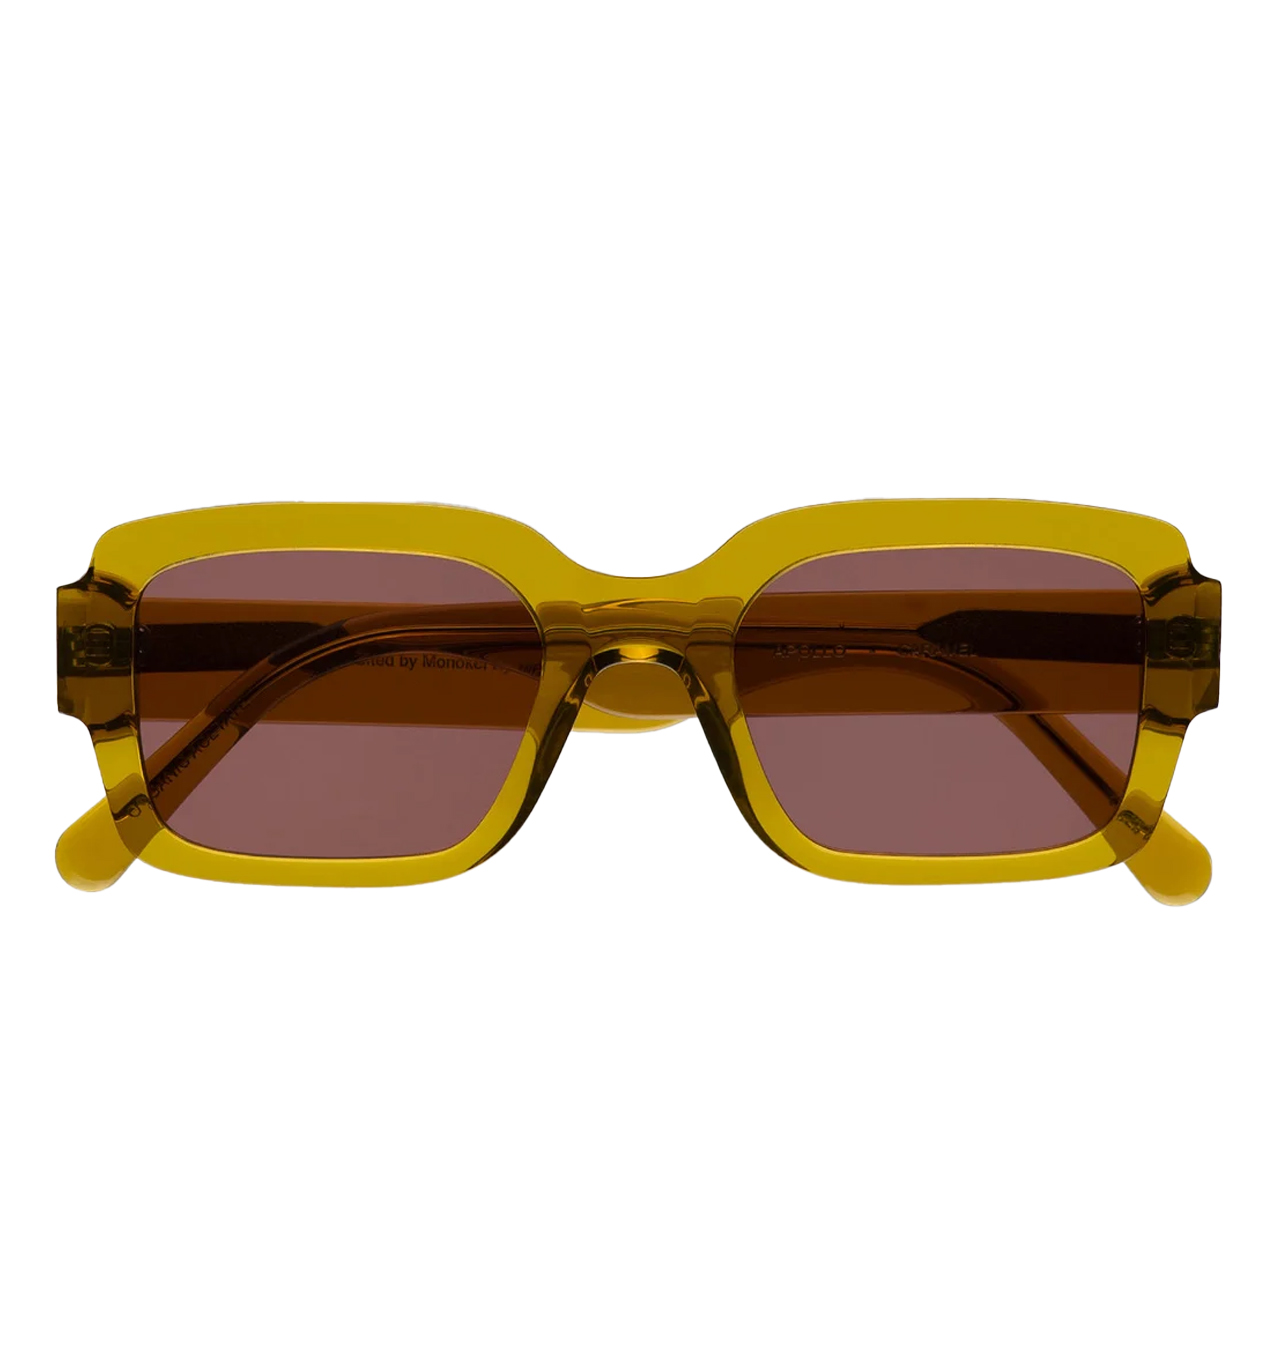 Monokel Eyewear - Apollo Caramel Sunglasses - Pink Solid Lens